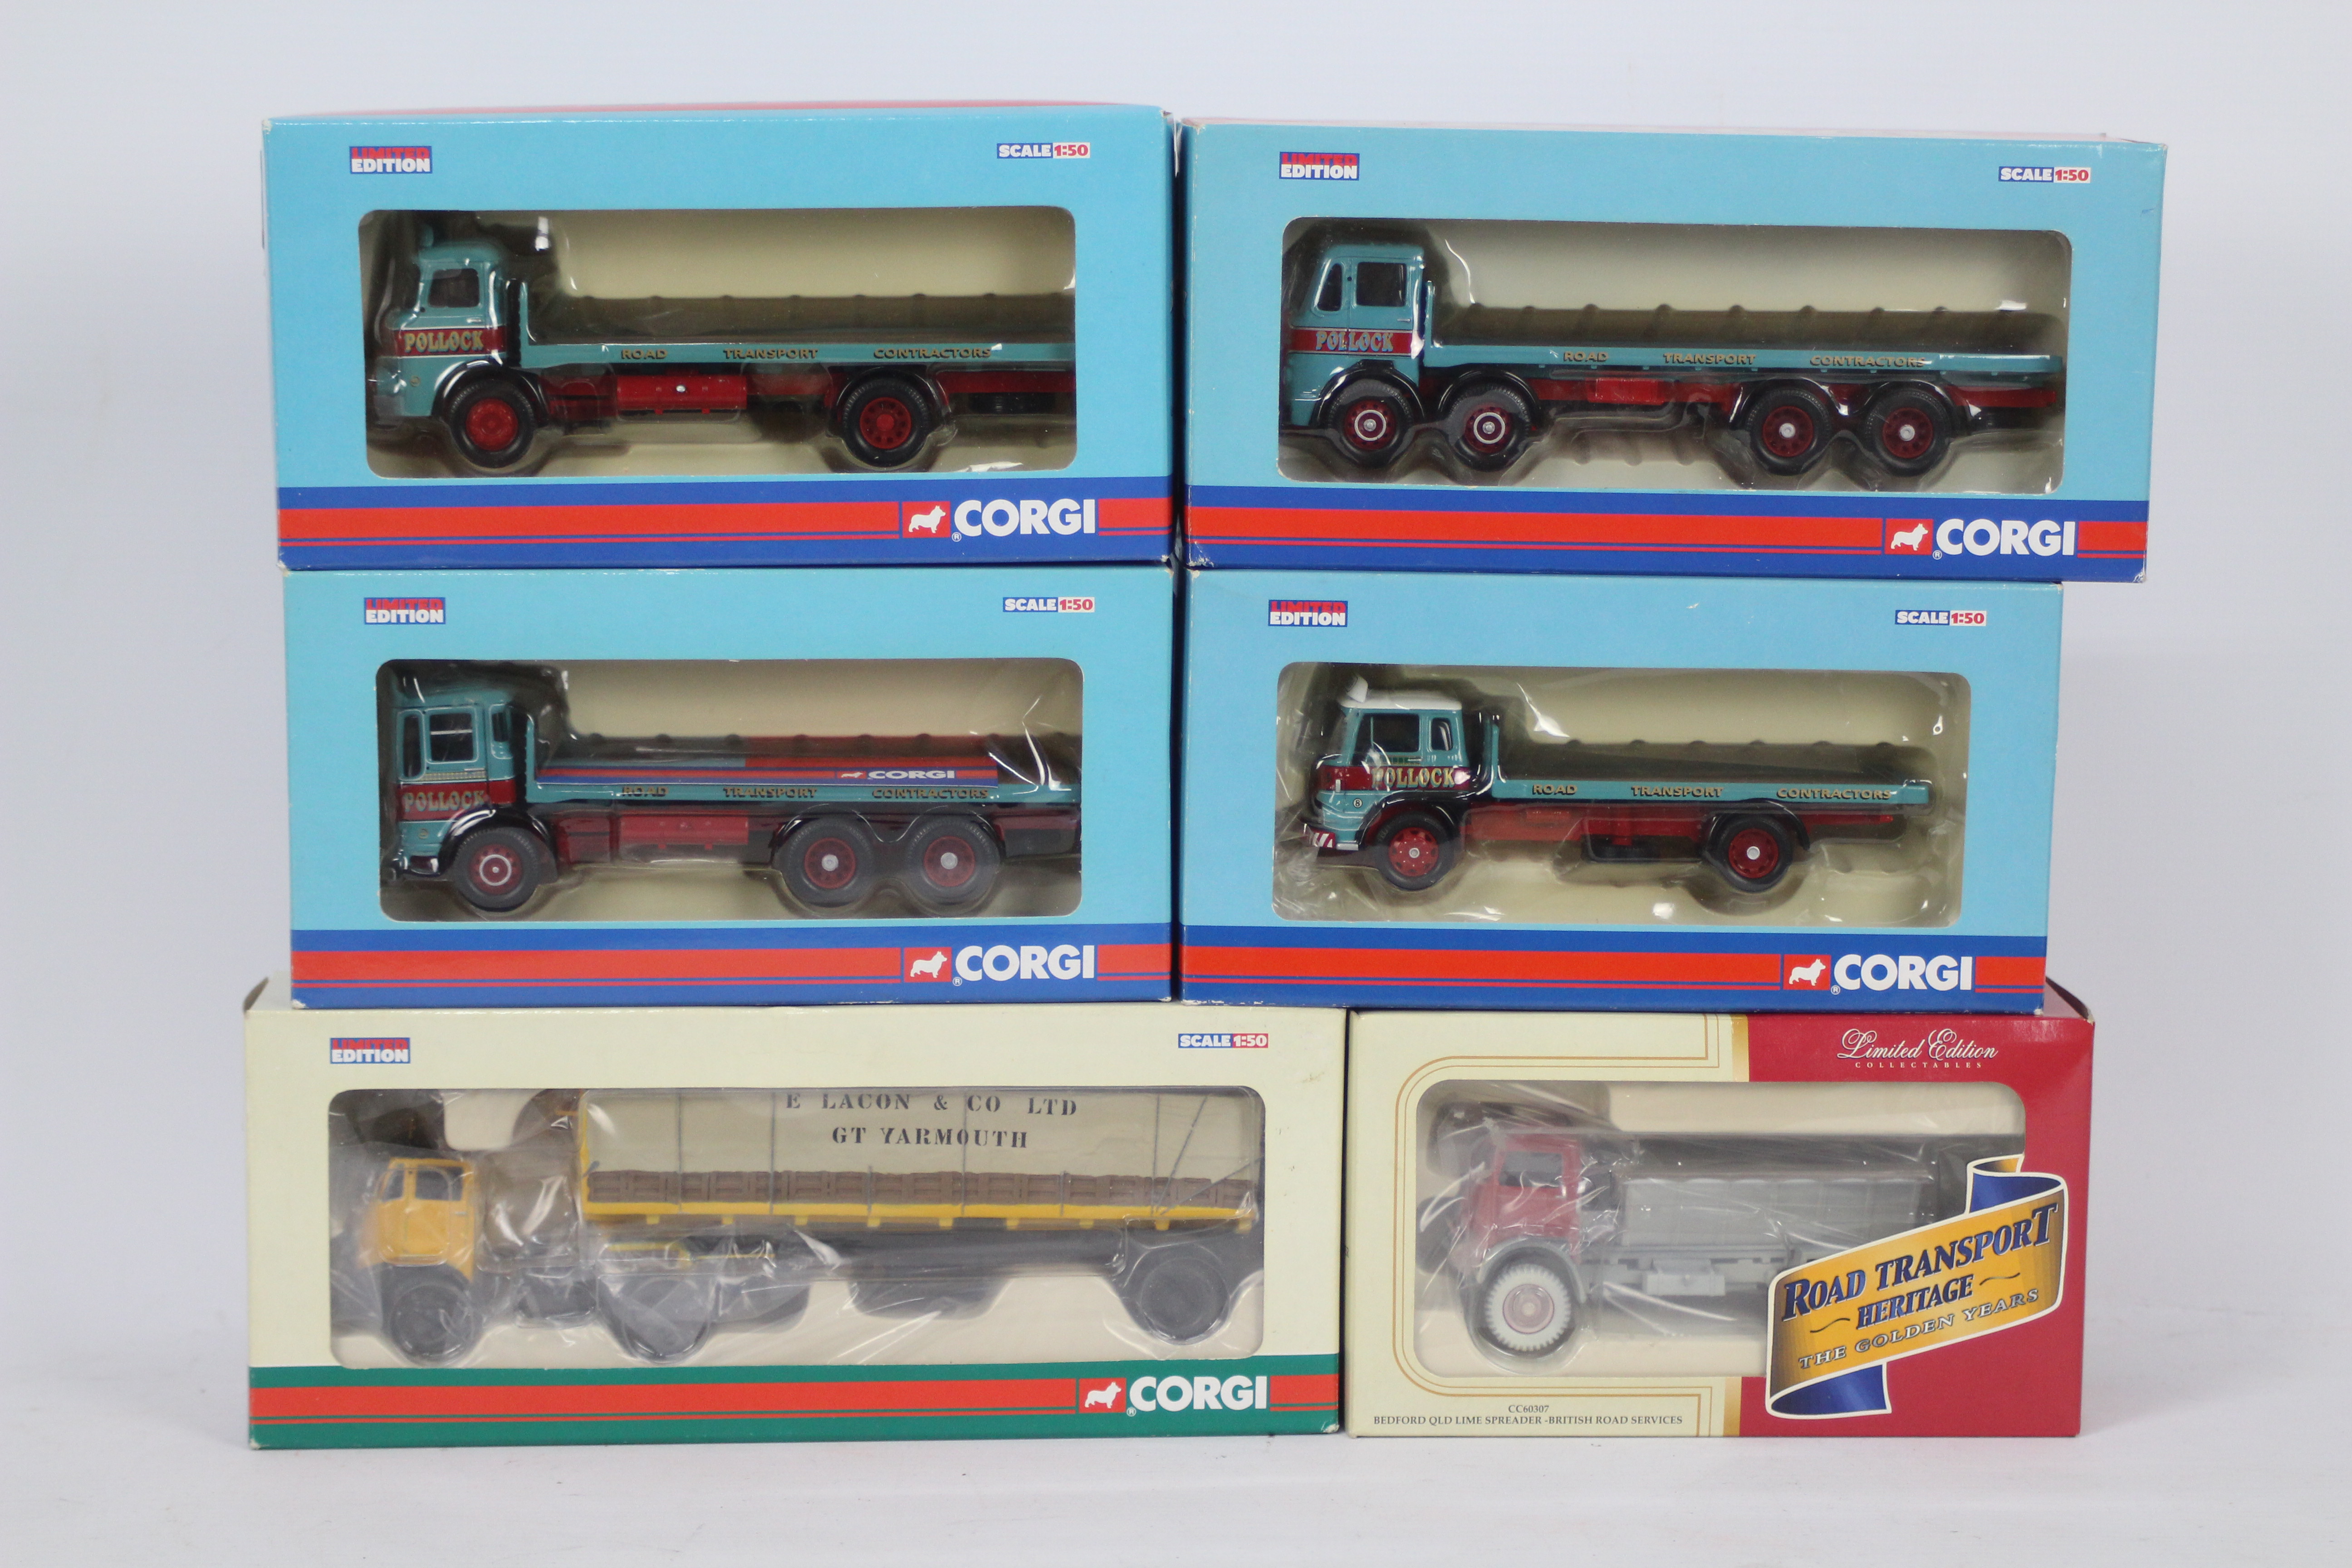 Corgi - Six boxed Limited Edition diecast 1:50 scale model trucks.